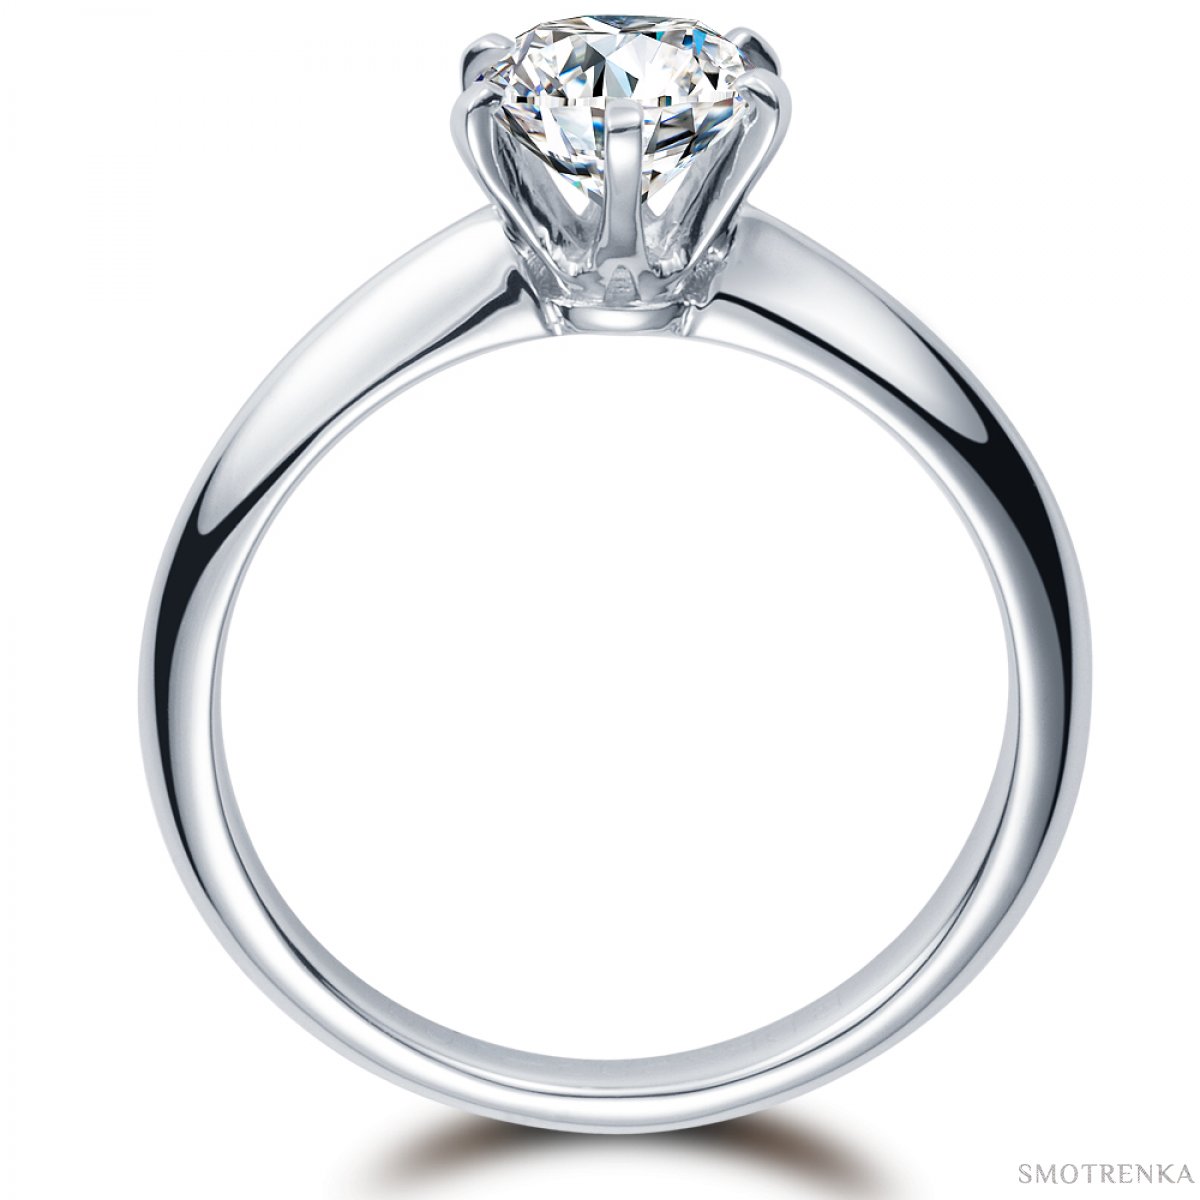 Ri n. Помолвочное кольцо из золота с бриллиантом (1043). Помолвочное кольцо с бриллиантом золотое. Кольцо с крупным бриллиантом. Кольцо с бриллиантом вид сбоку.